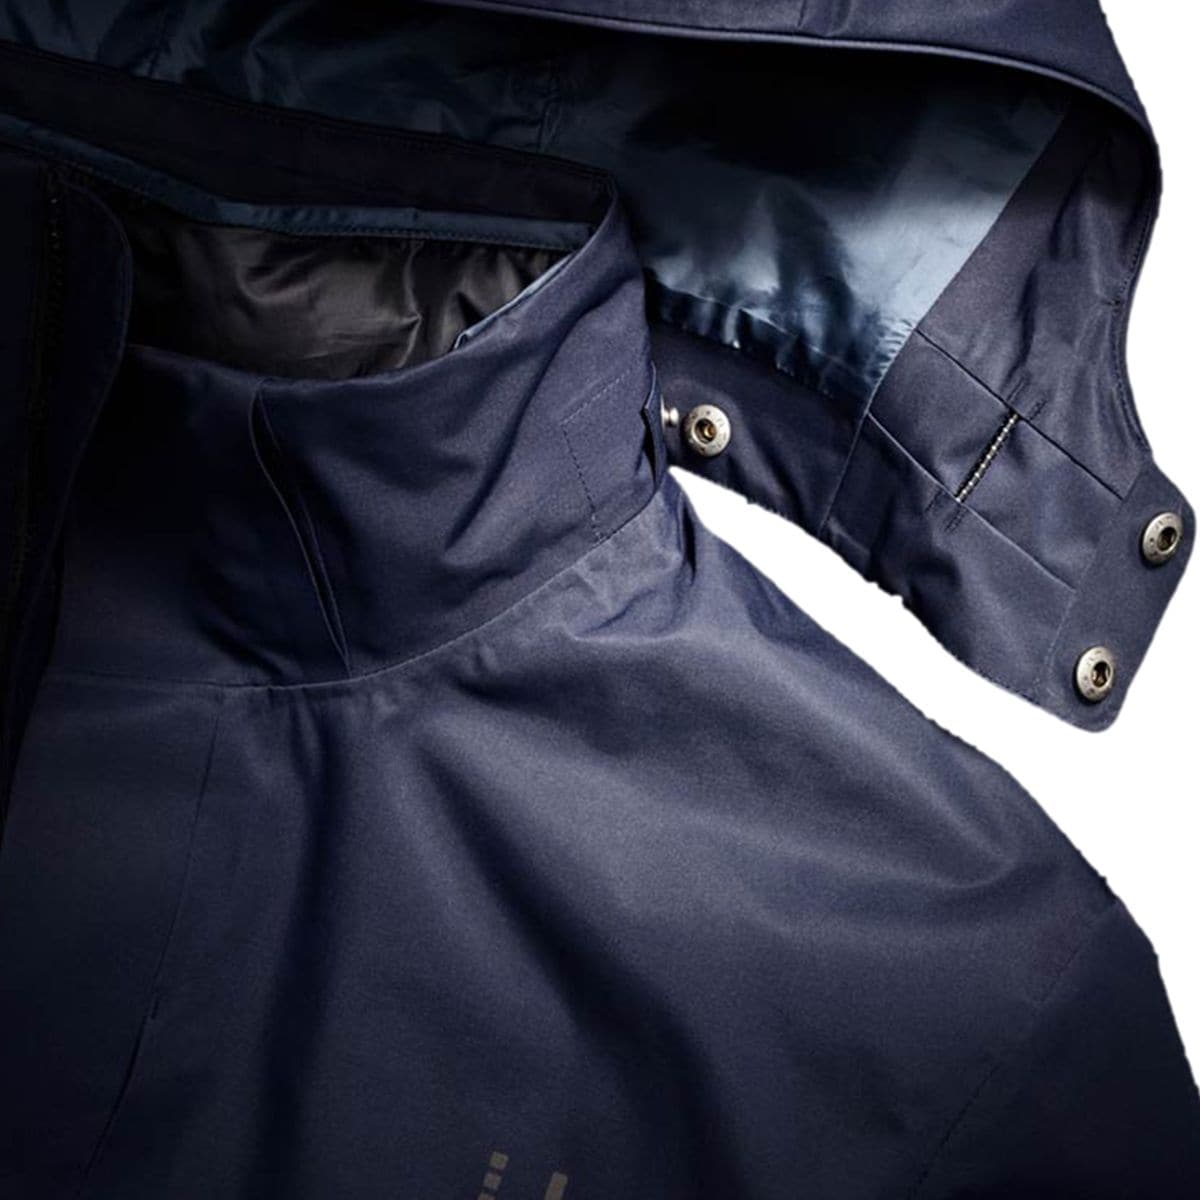 UBR Black Storm Coat II - Men's - Clothing